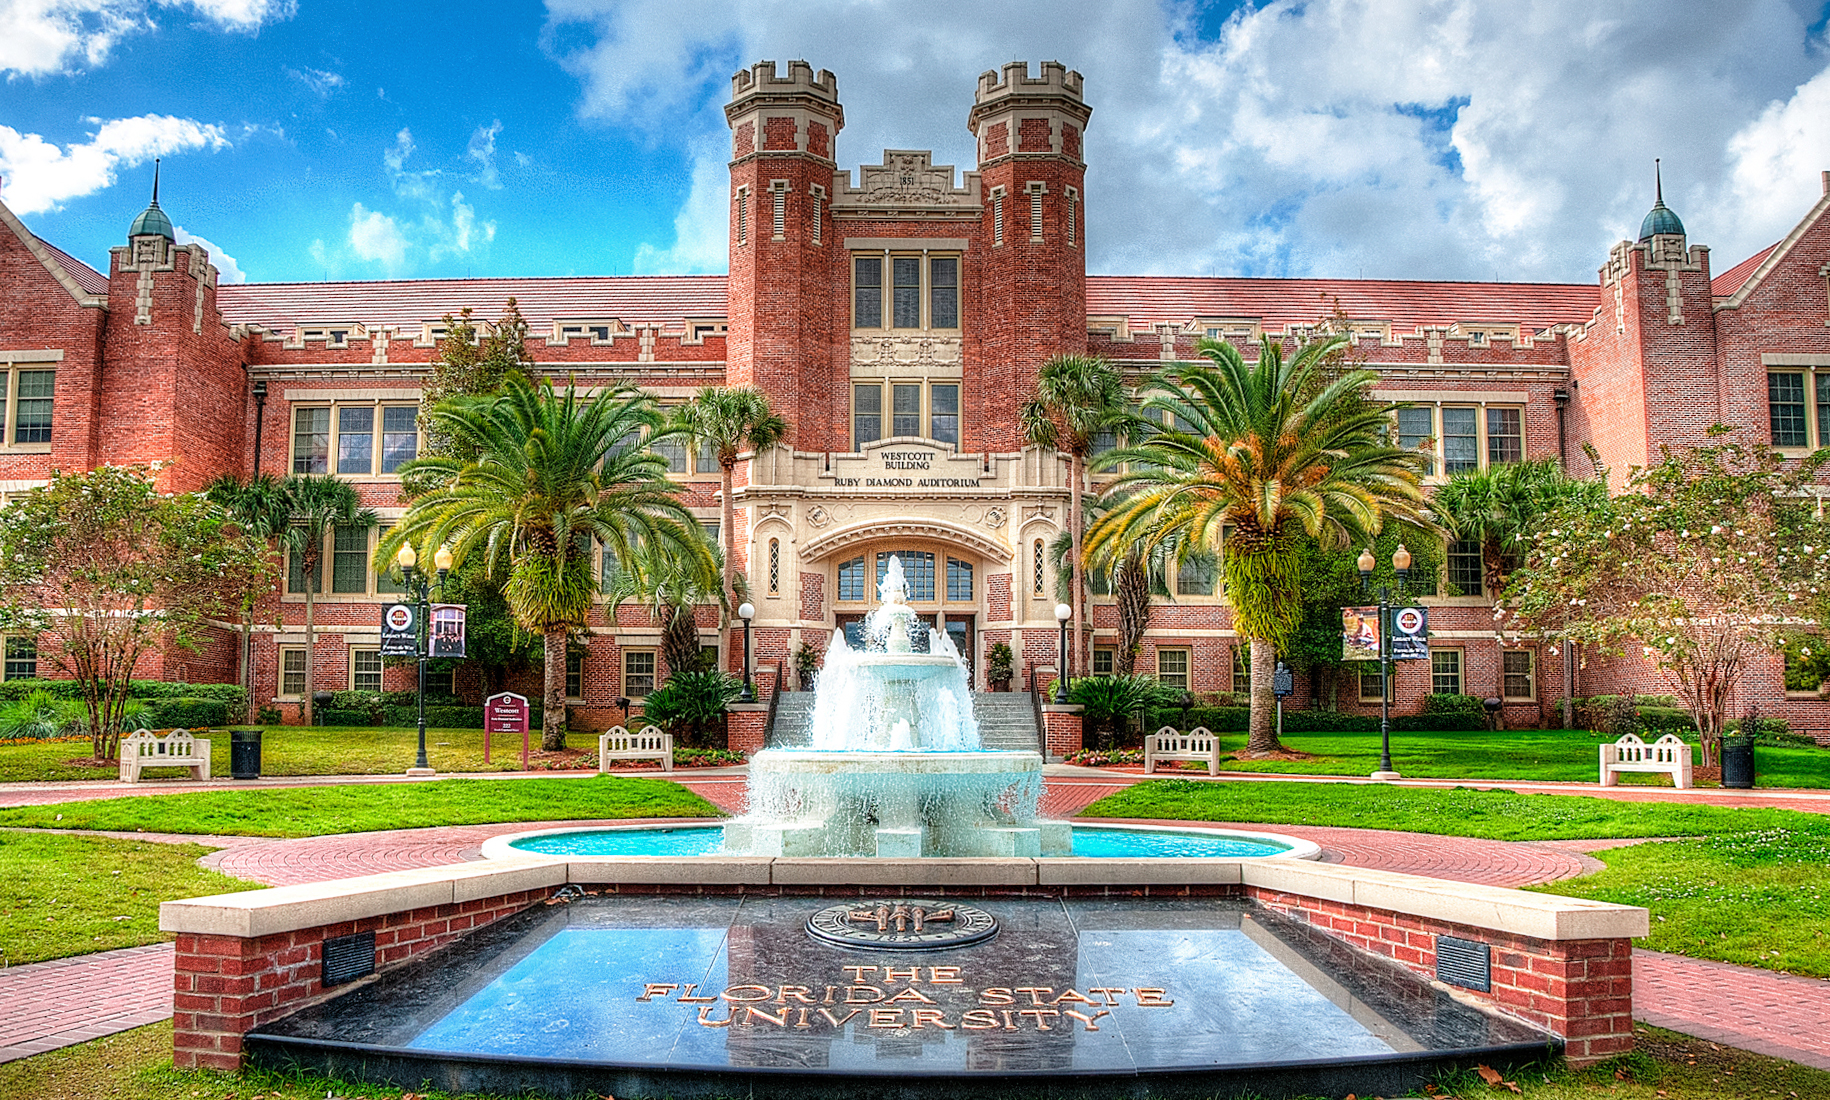 University School of Florida